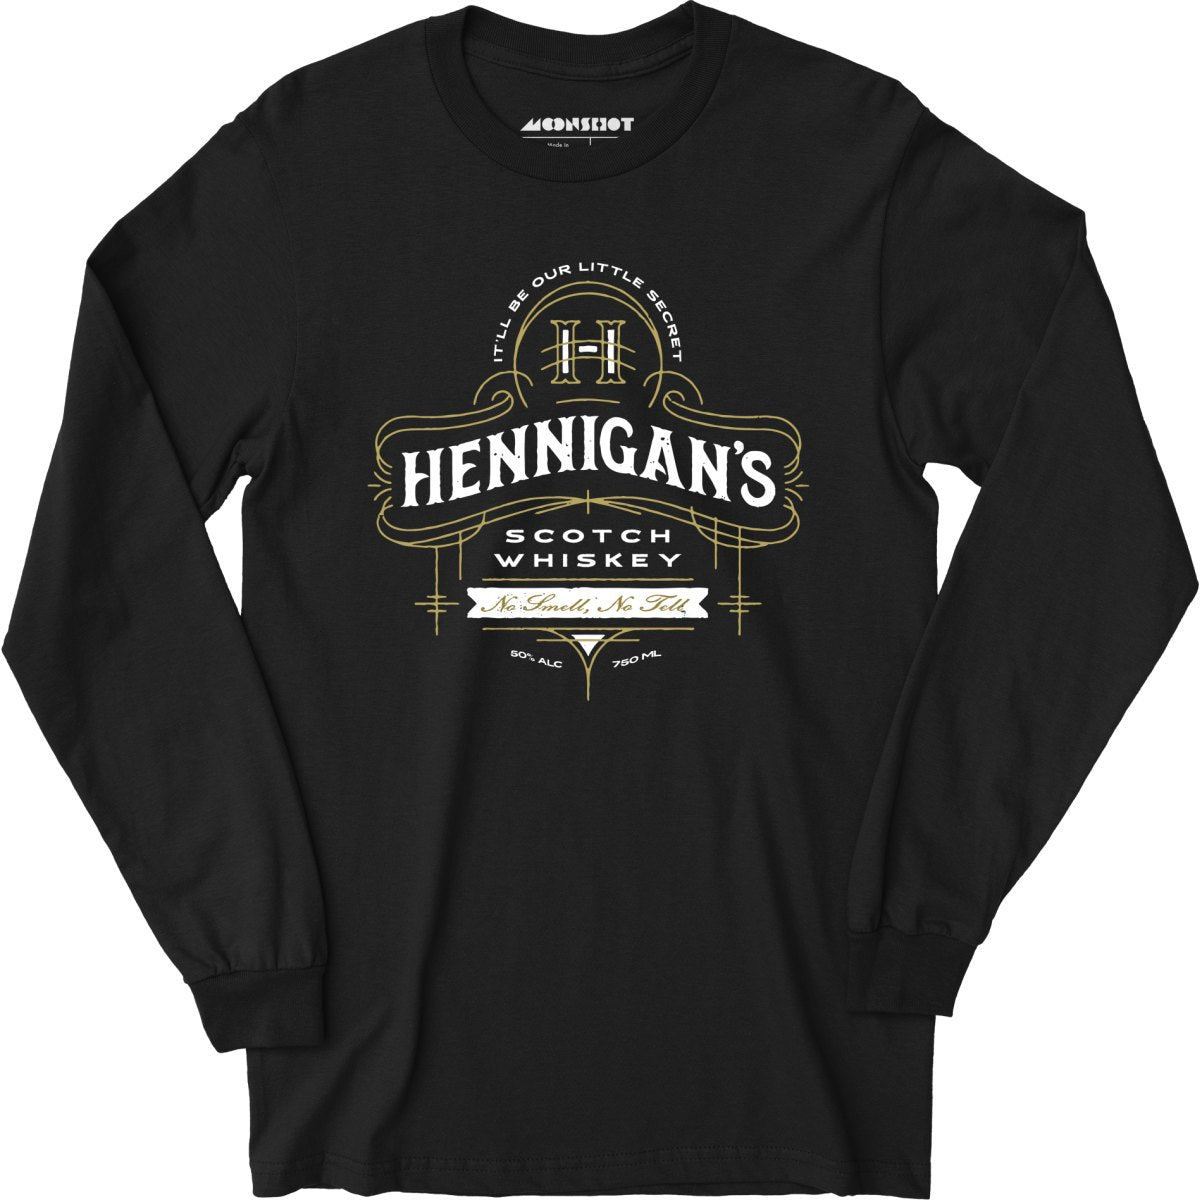 Hennigan's Scotch Whiskey - Long Sleeve T-Shirt